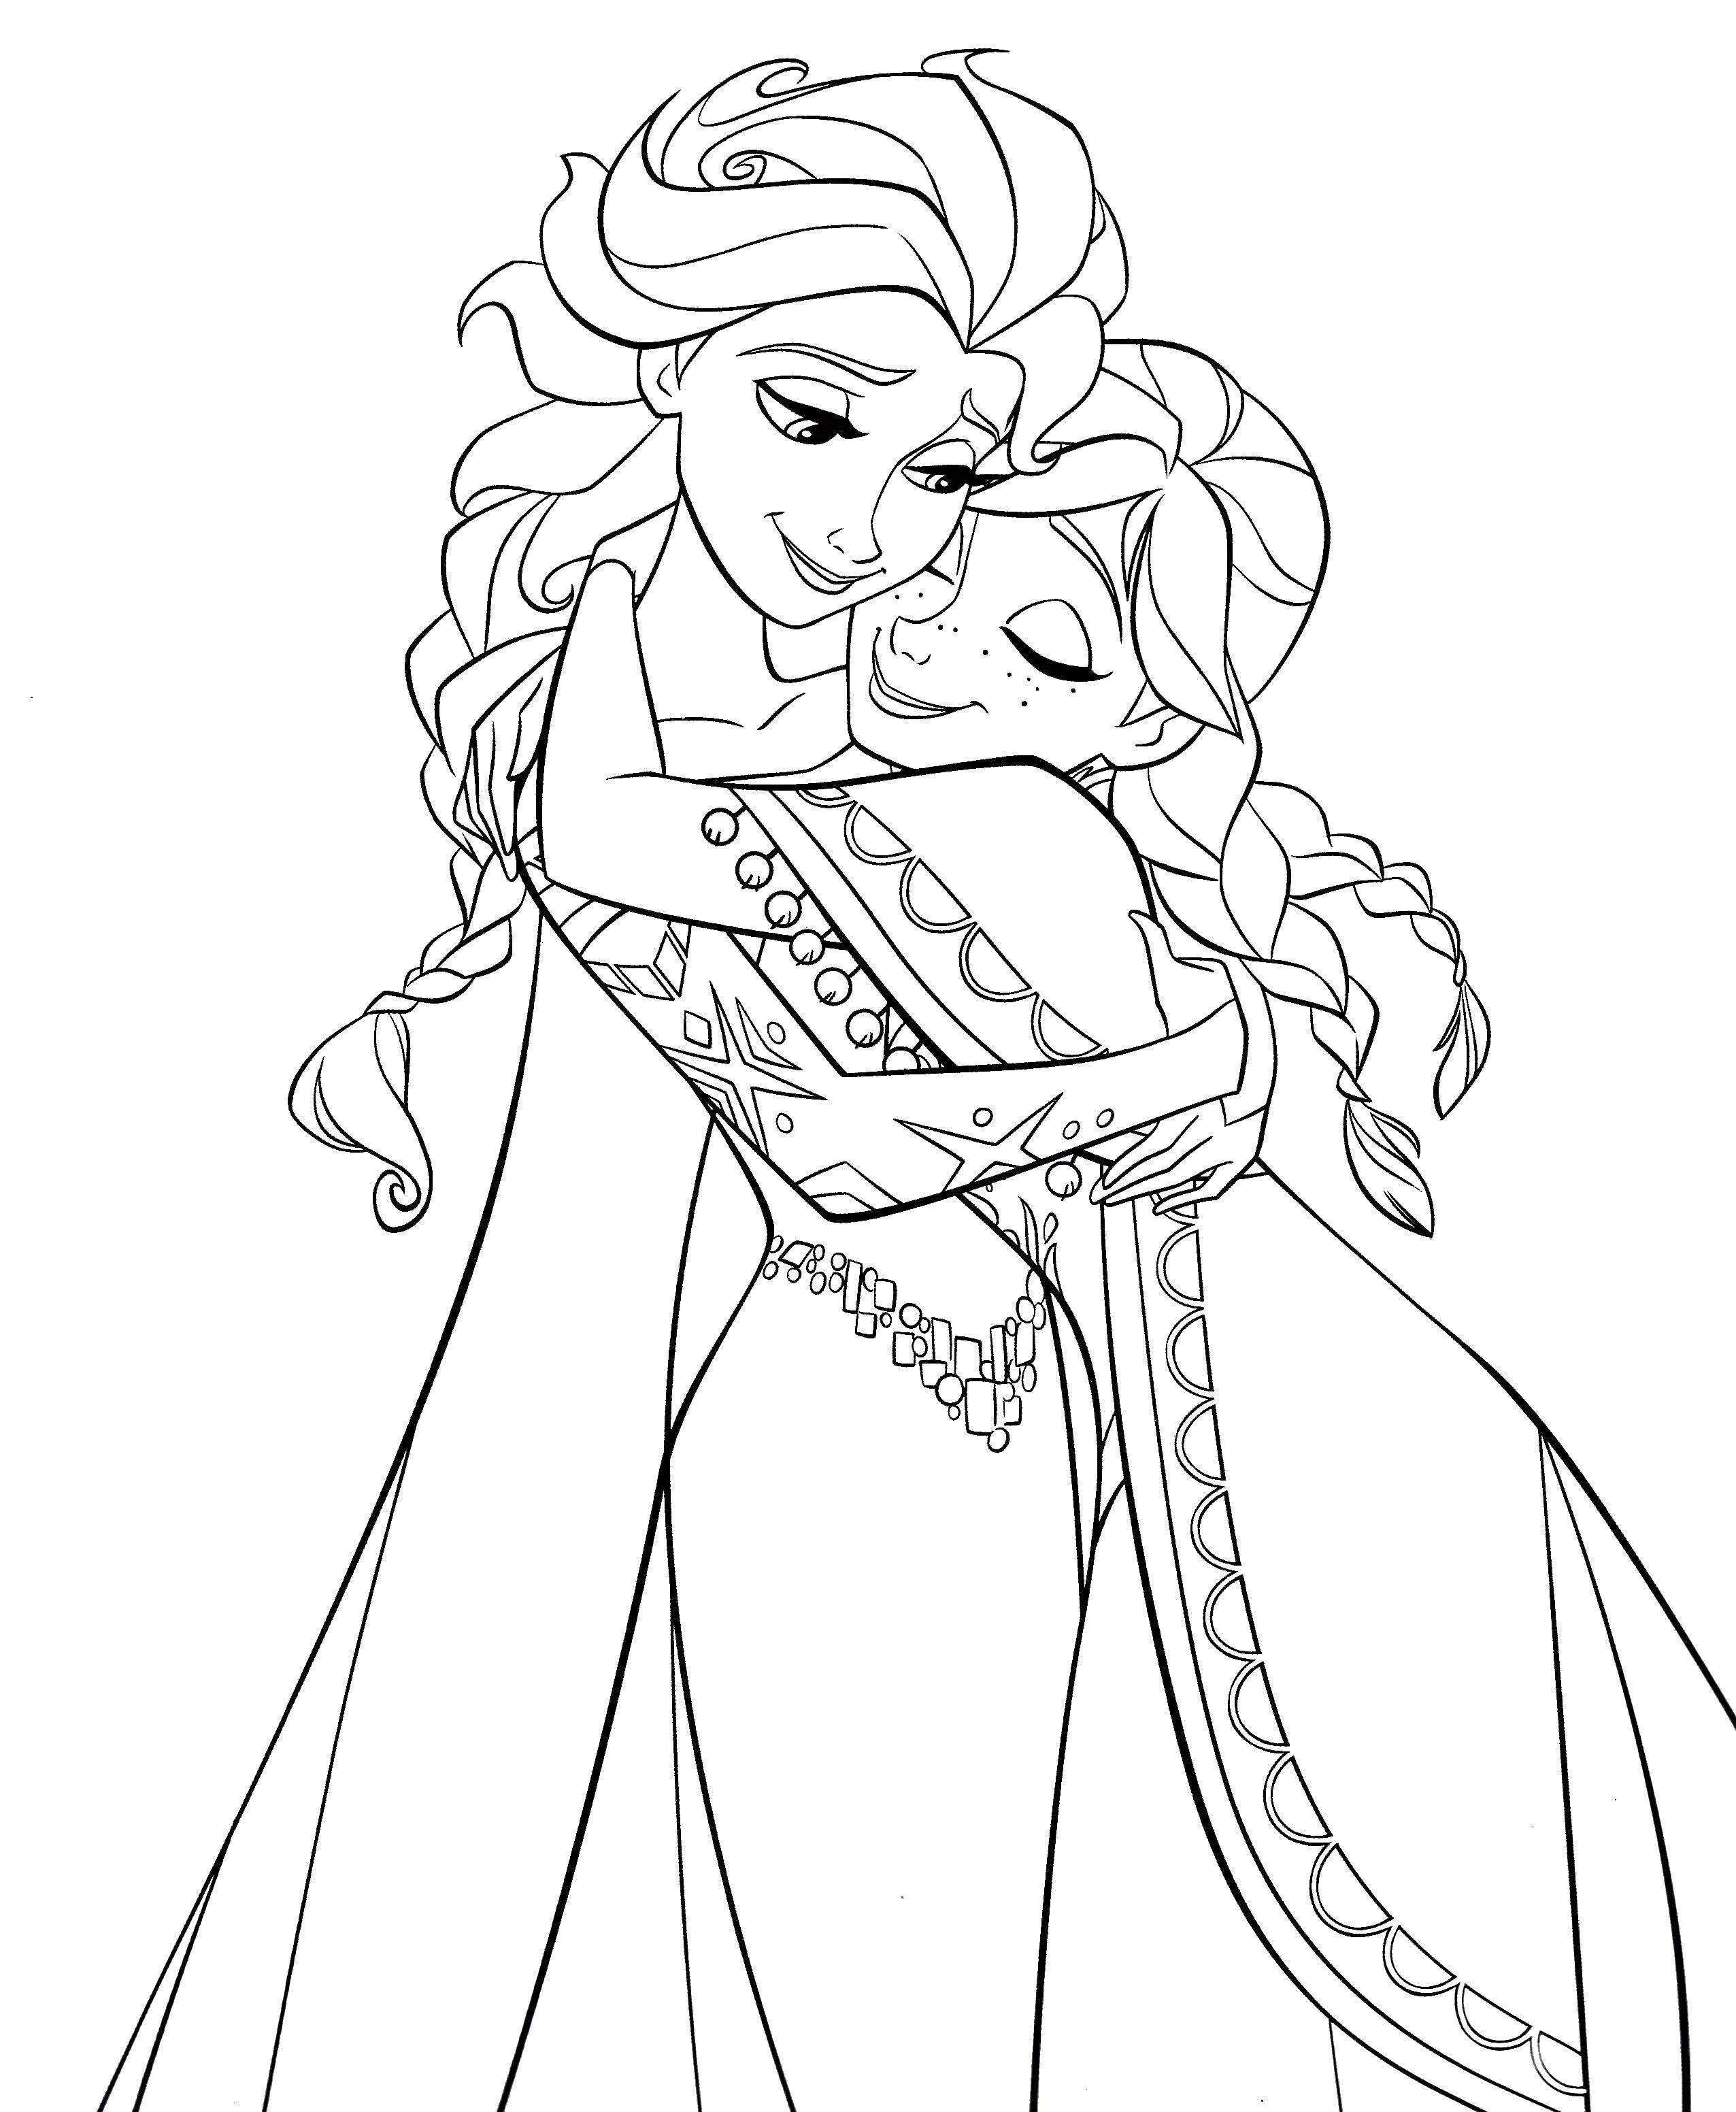 Coloring Elsa and Anna. Category Disney coloring pages. Tags:  Elsa, Anna, Princess.